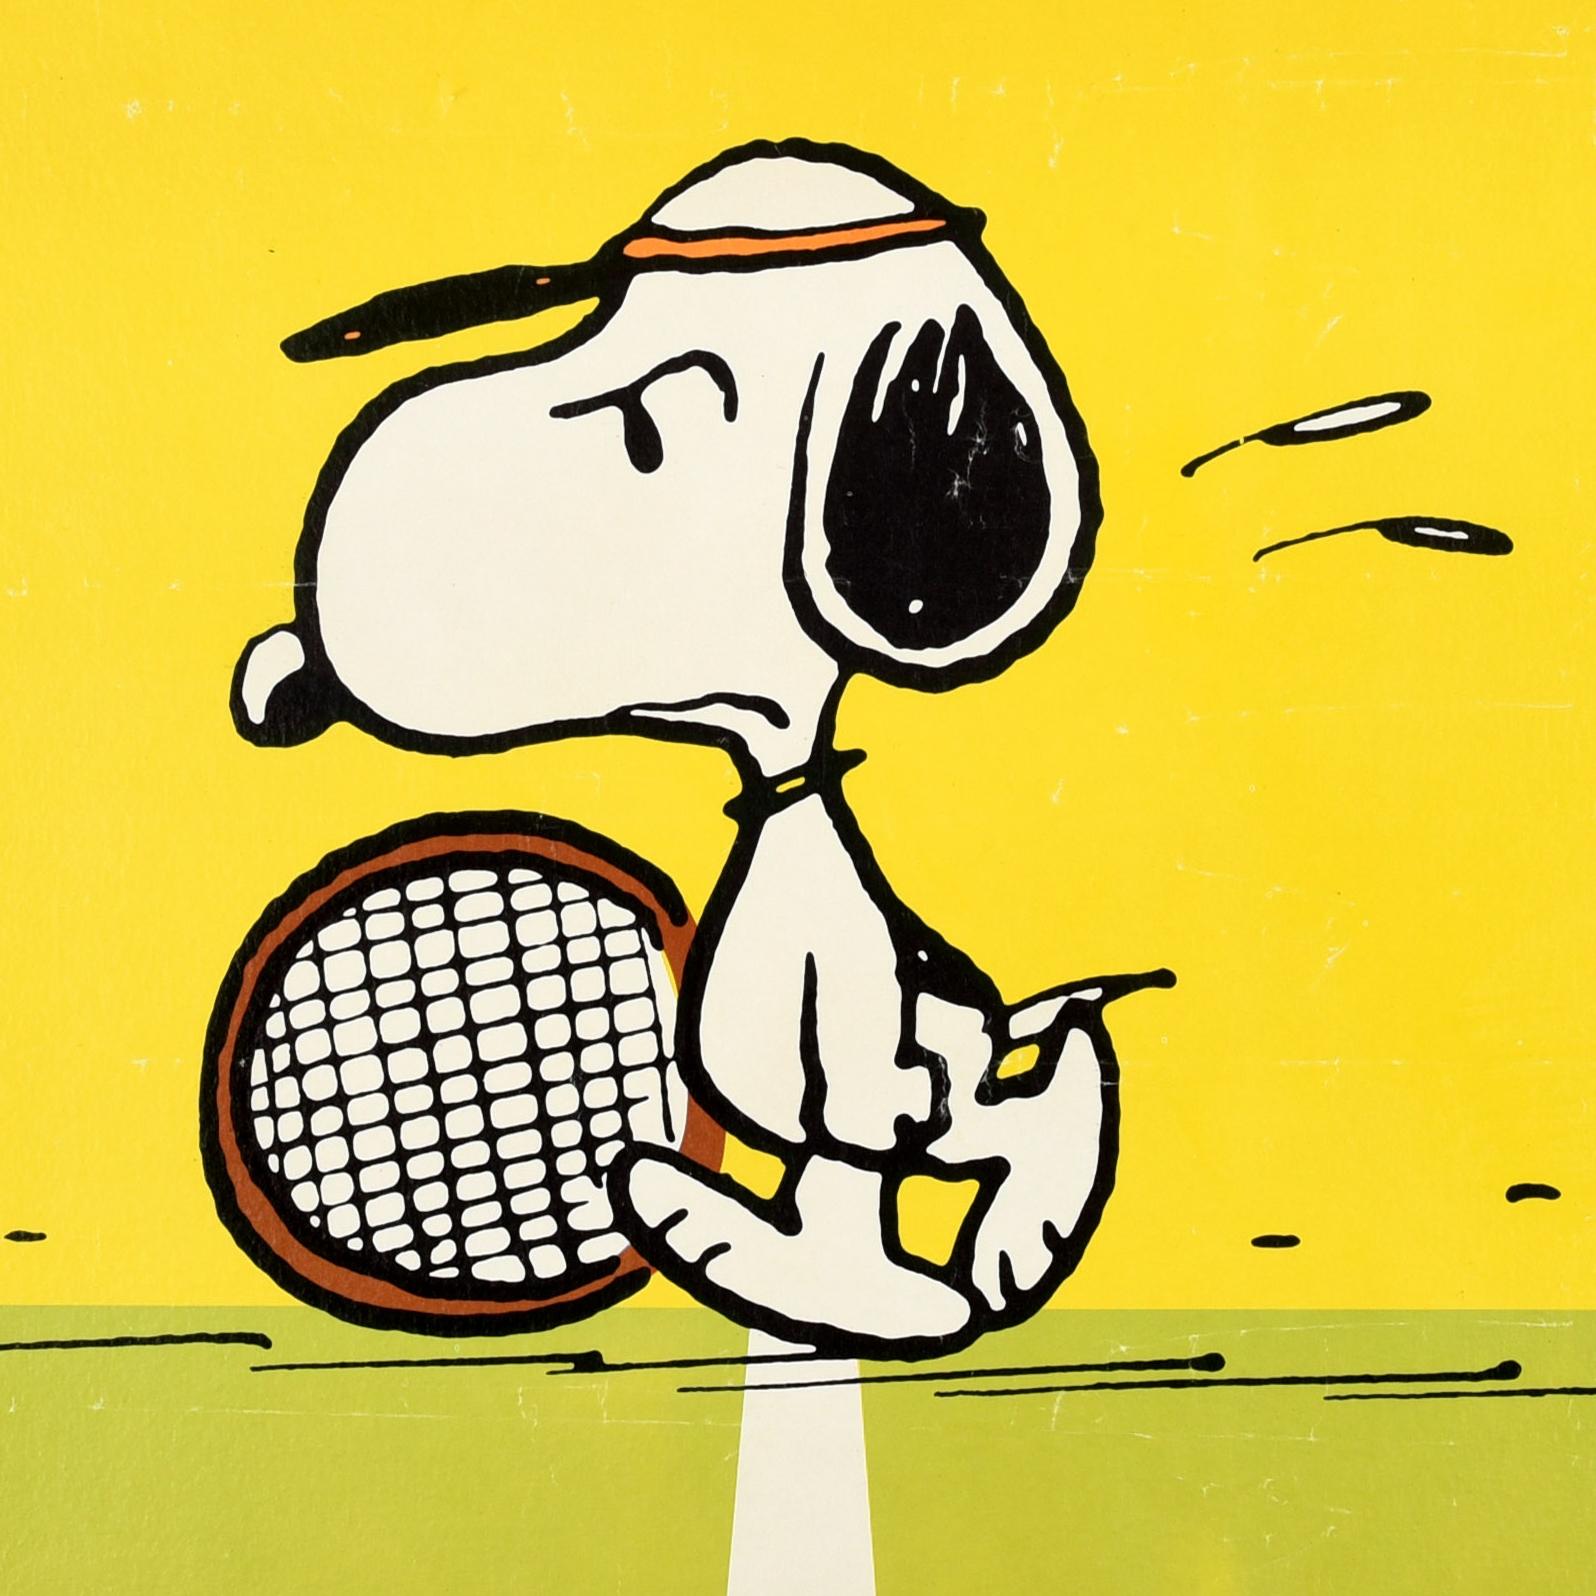 Original Vintage Poster Snoopy Tennis Win Lose Charles M Schulz Peanuts Cartoon - Print by Charles M. Schulz